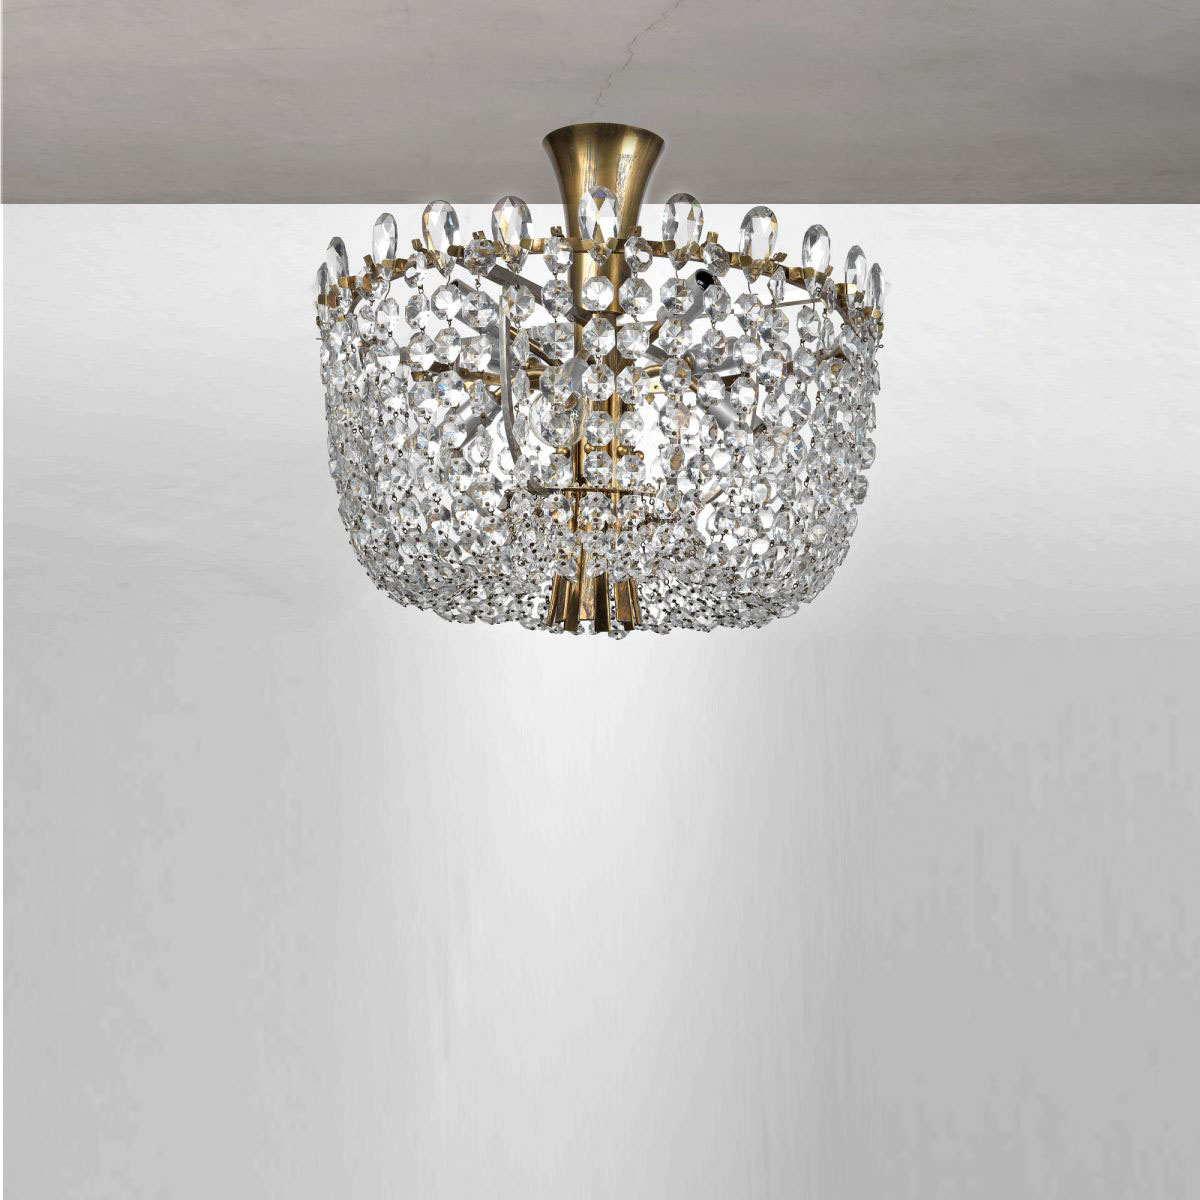 Ceiling lamp Rondino Mod. 5207 J. T. Kalmar pic-1